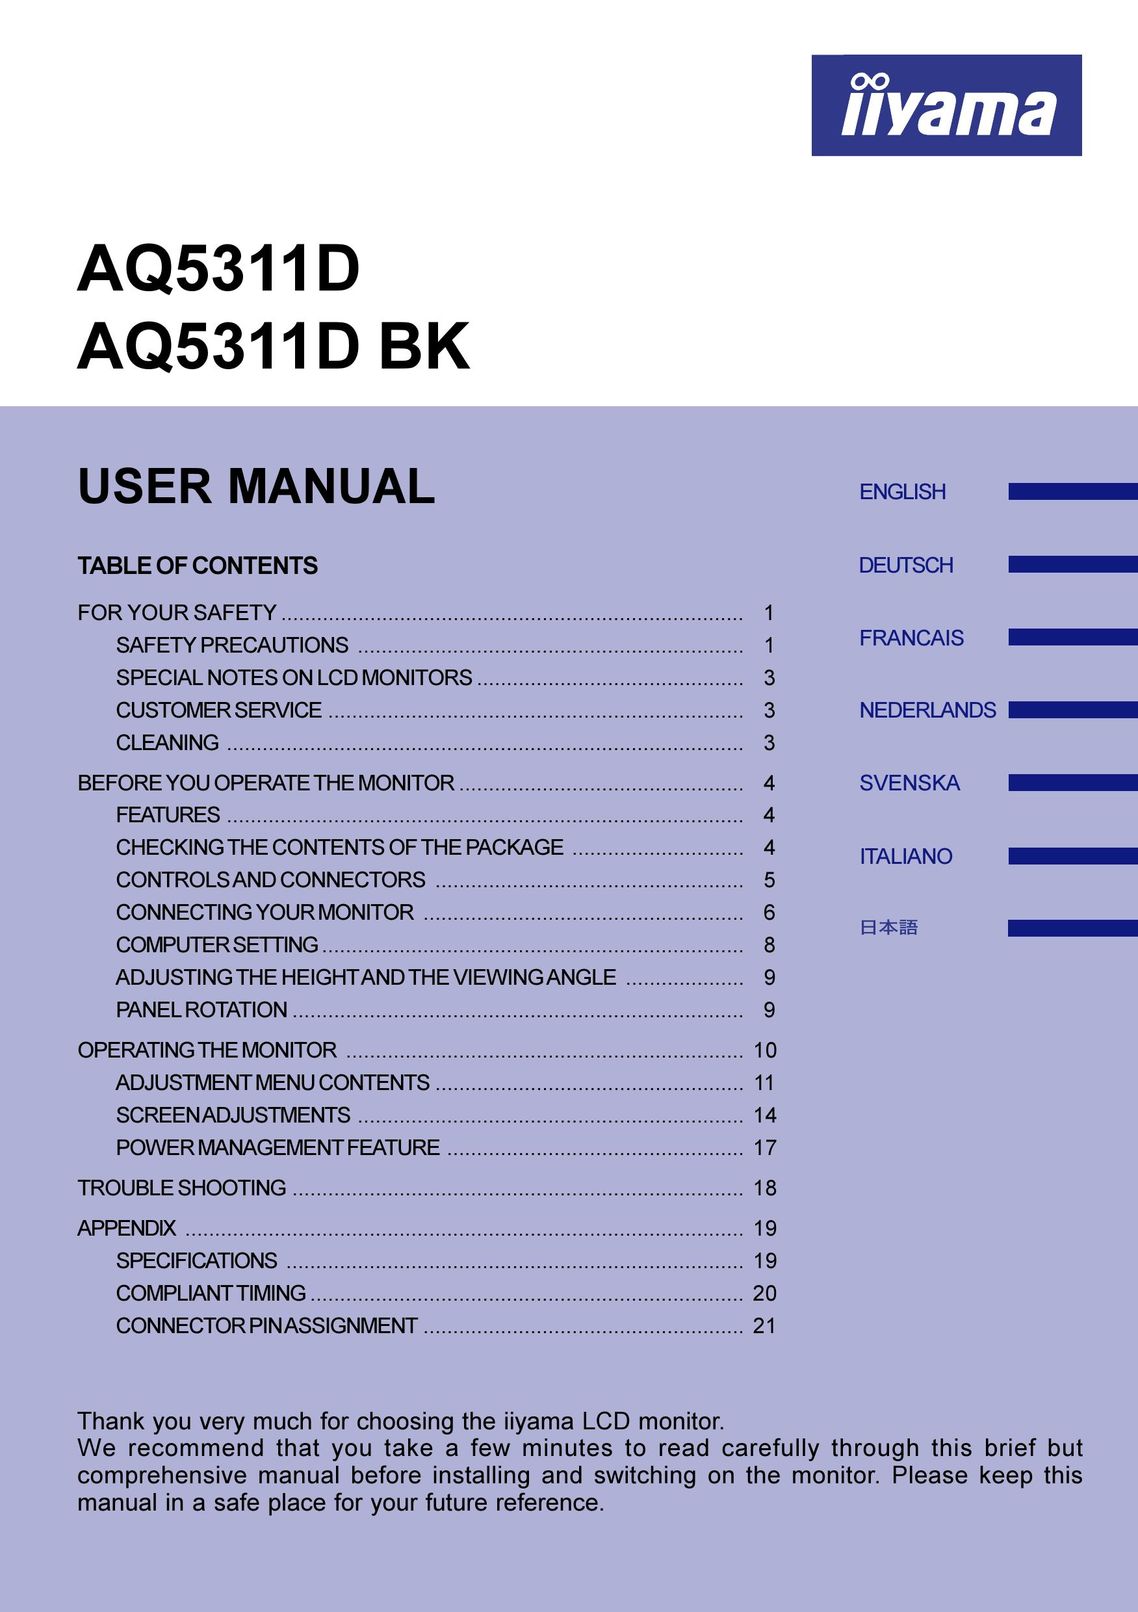 Iiyama AQ5311D BK Computer Monitor User Manual